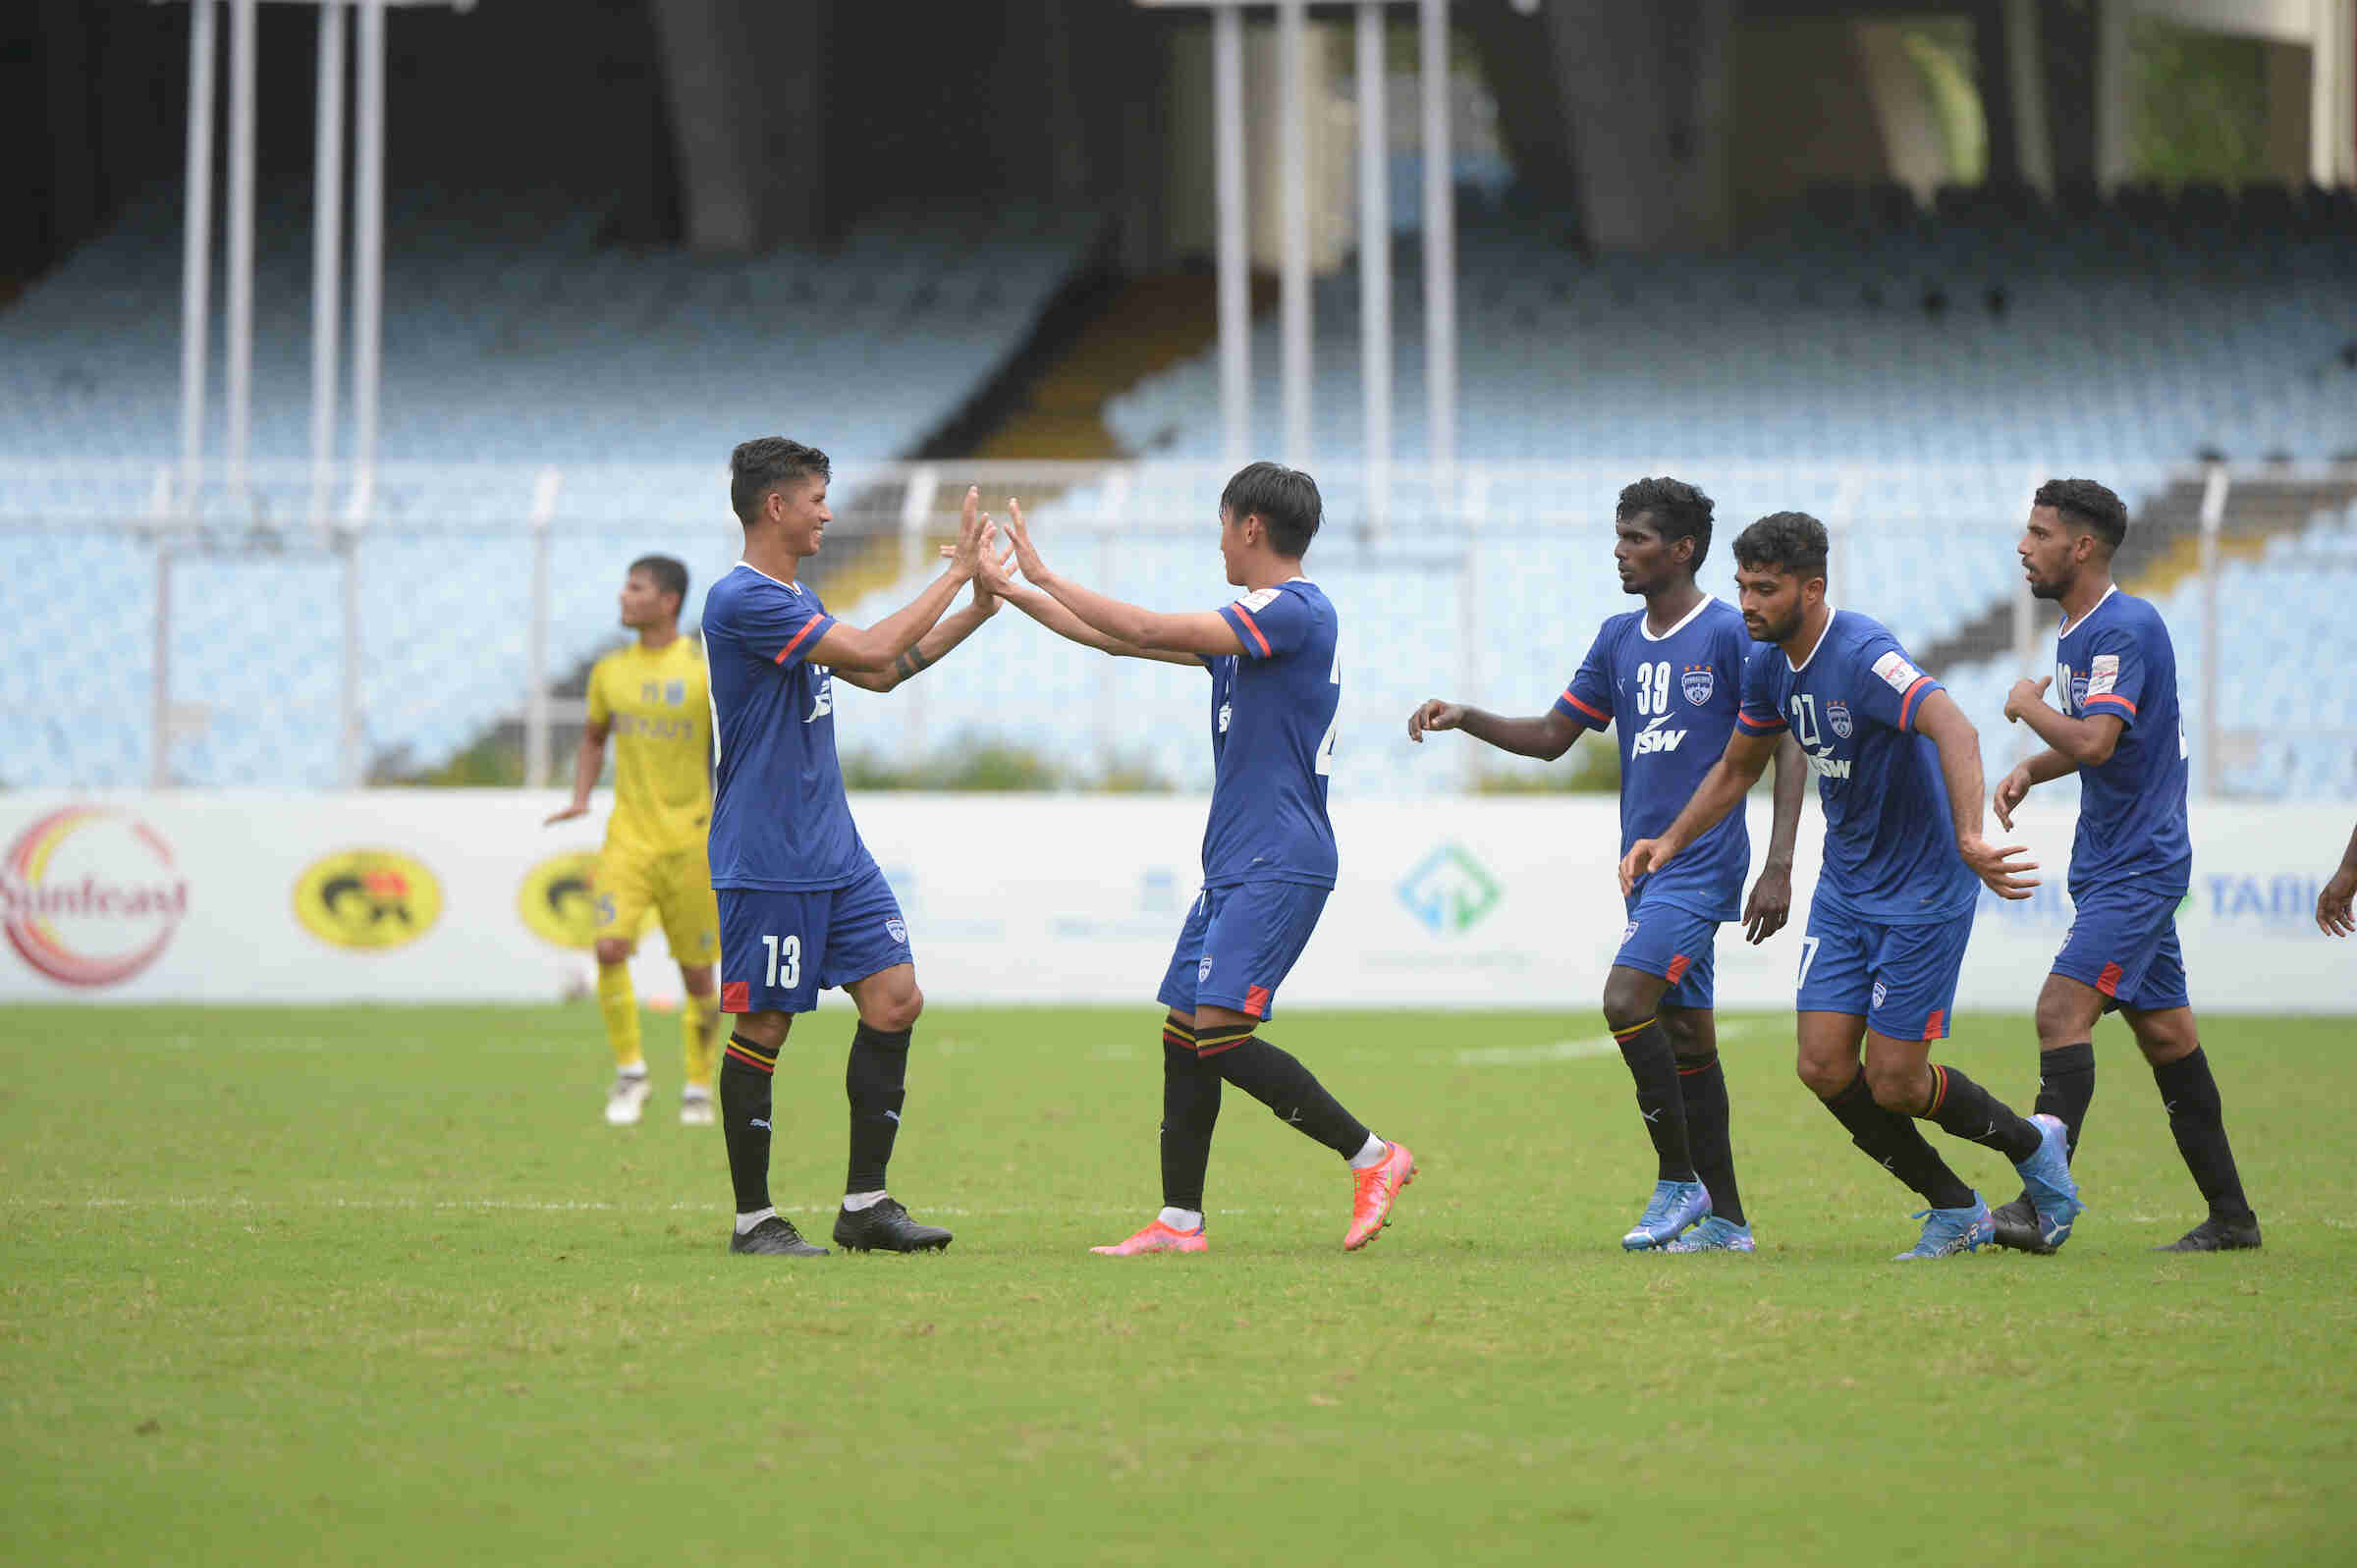 Durand Cup 2021: Bengaluru FC beat 8 men Kerala Blasters to start their ...